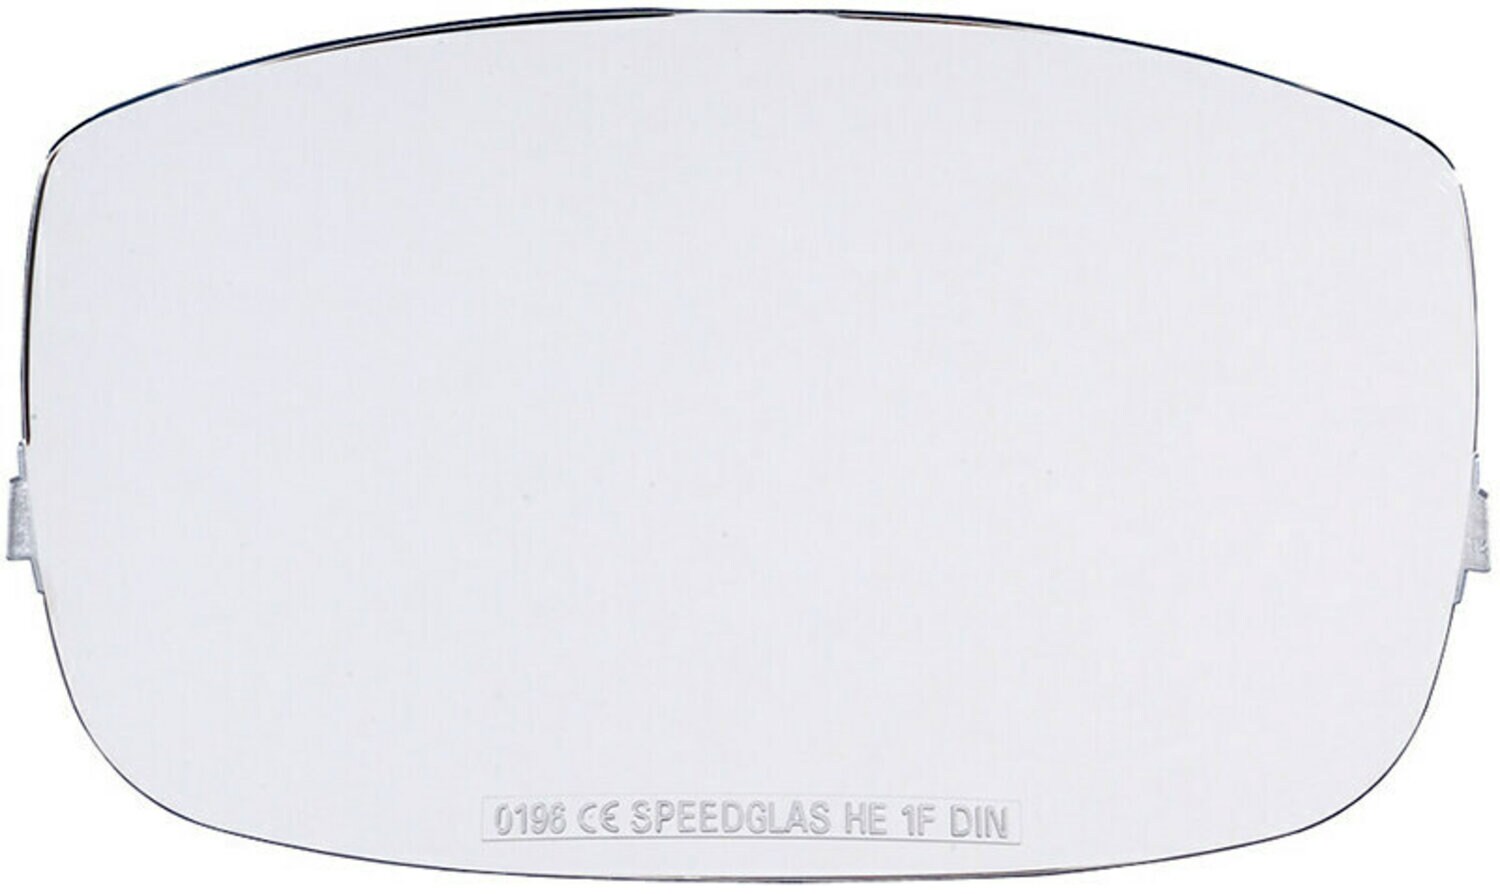 7100009491 - 3M Speedglas 9000 Welding Helmet Outside Protection Plate 04-0270-01,
10 EA/BAG